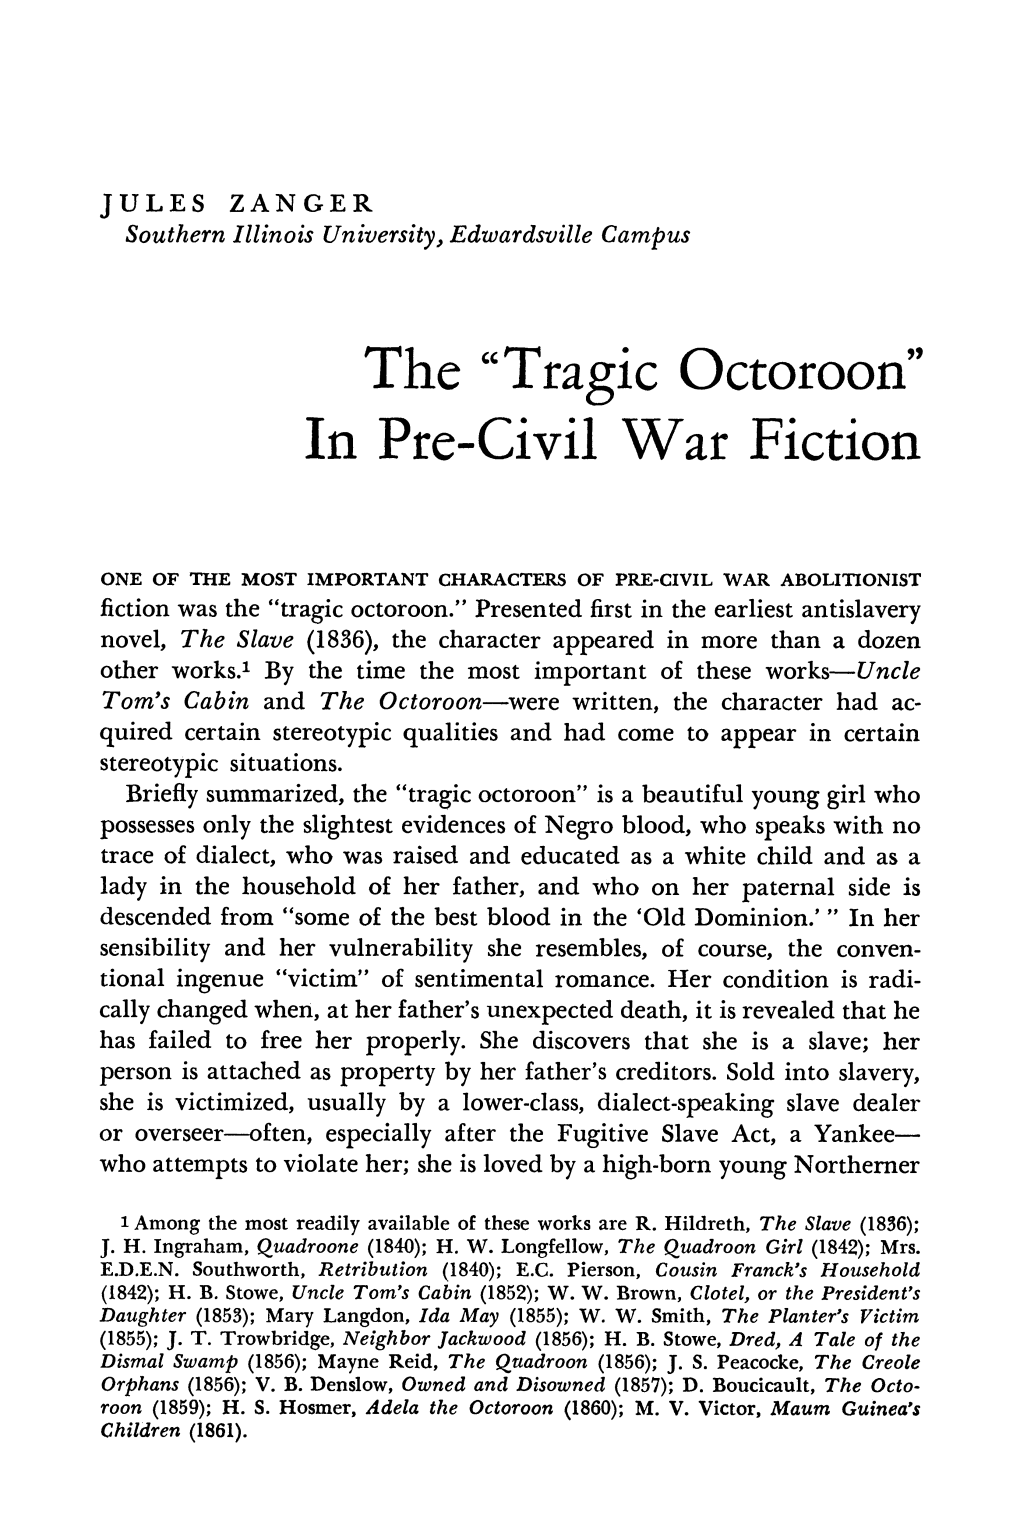 The "Tragic Octoroon" in Pre-Civil War Fiction